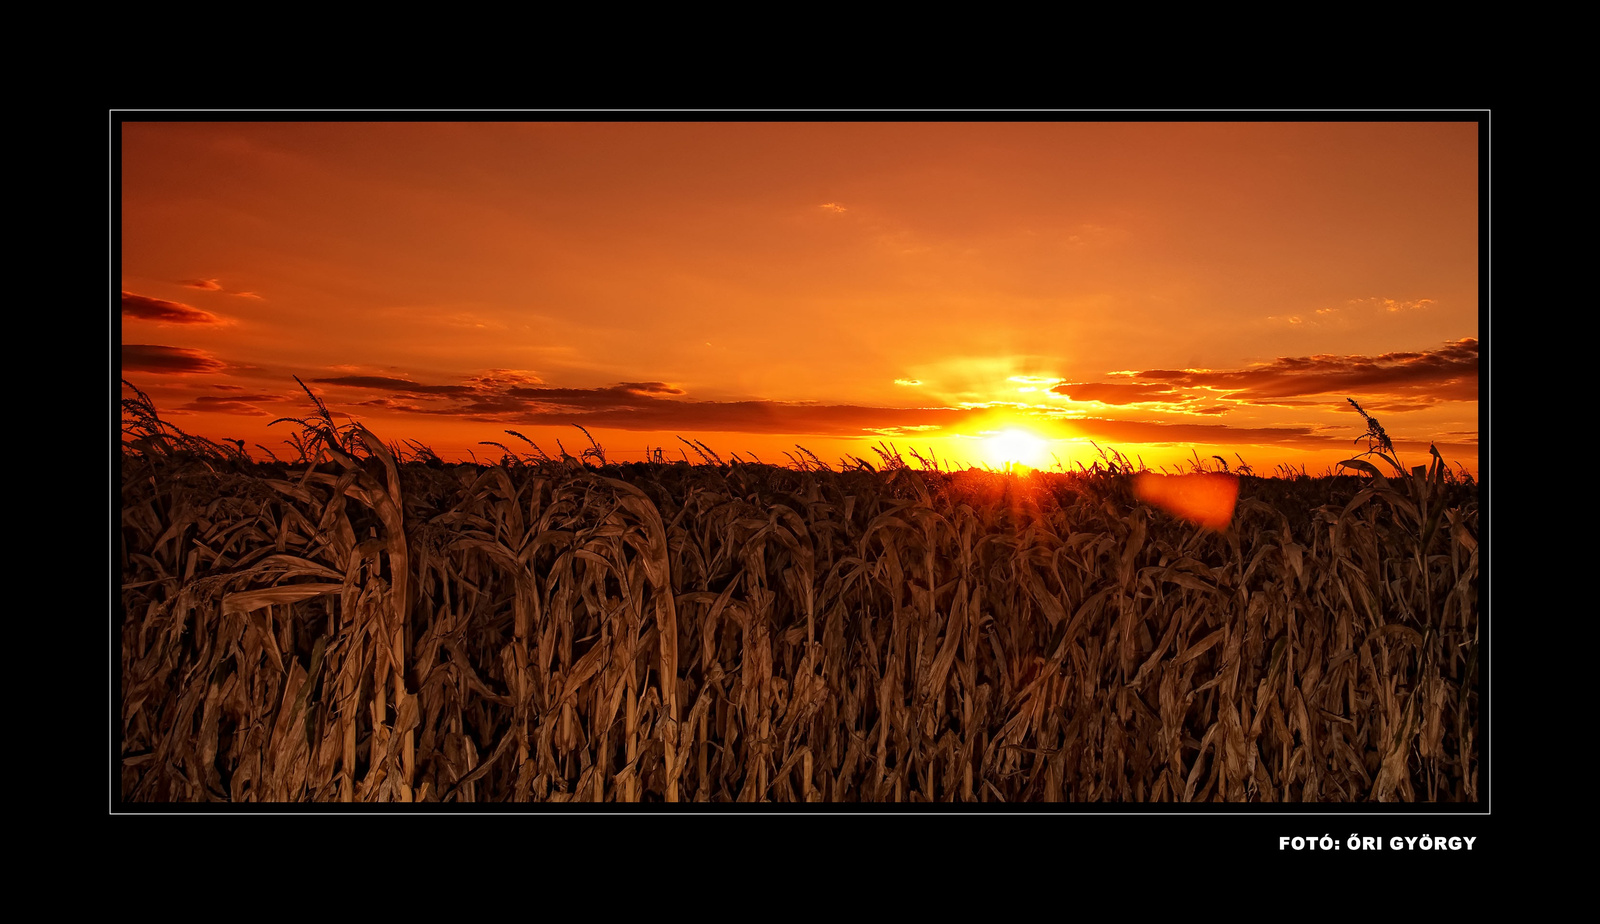 Kukorica naplementében